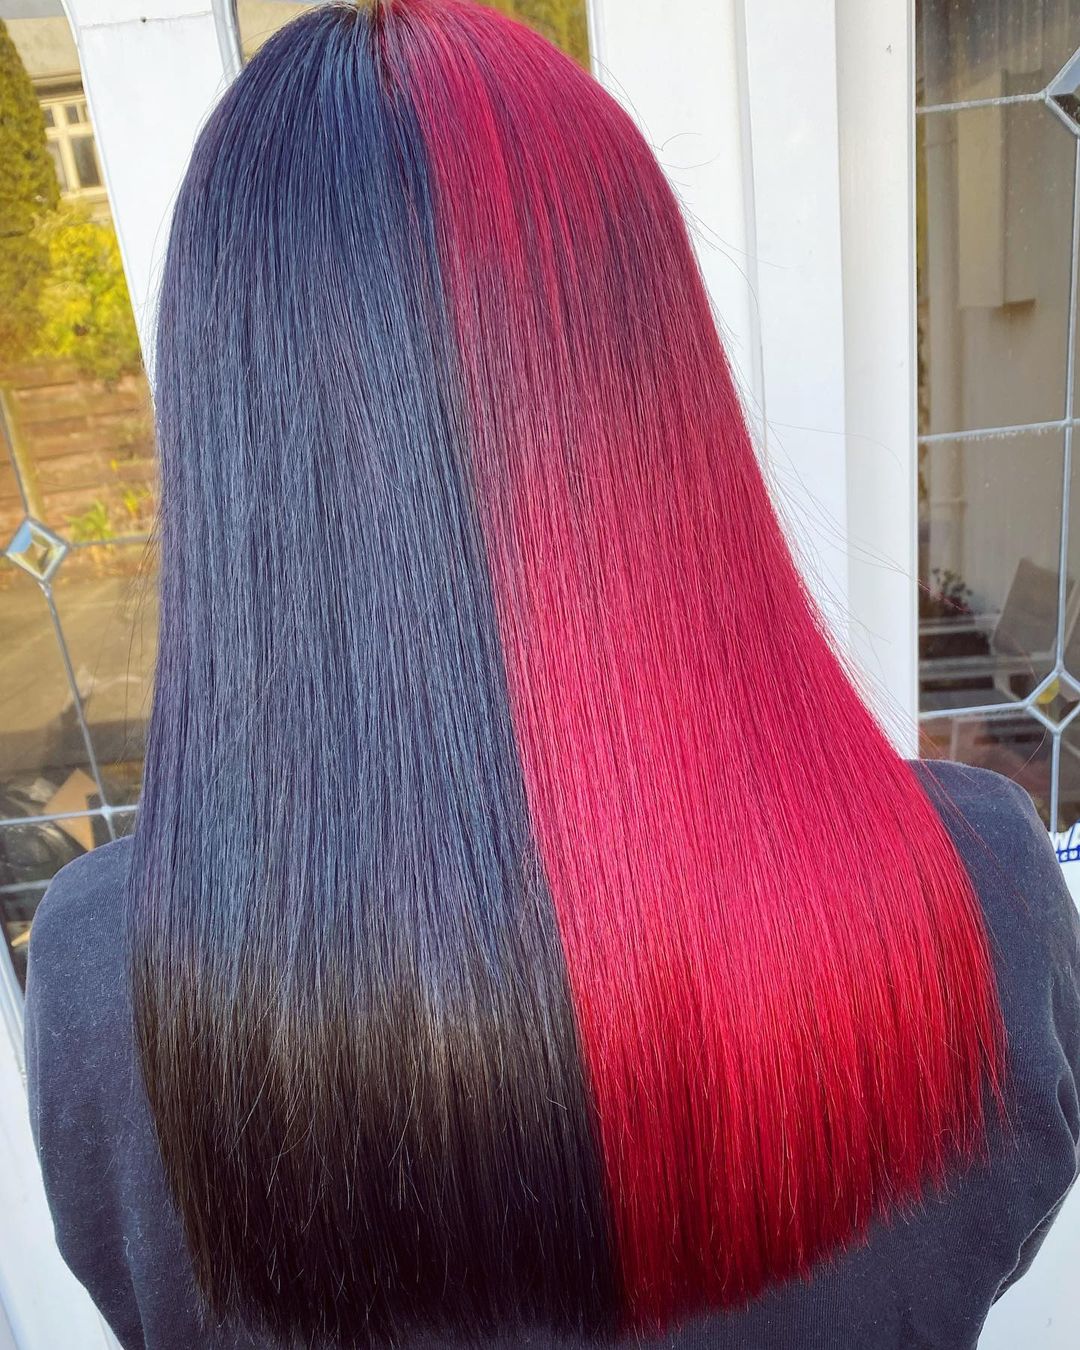 Short half red half black hair with bangs.